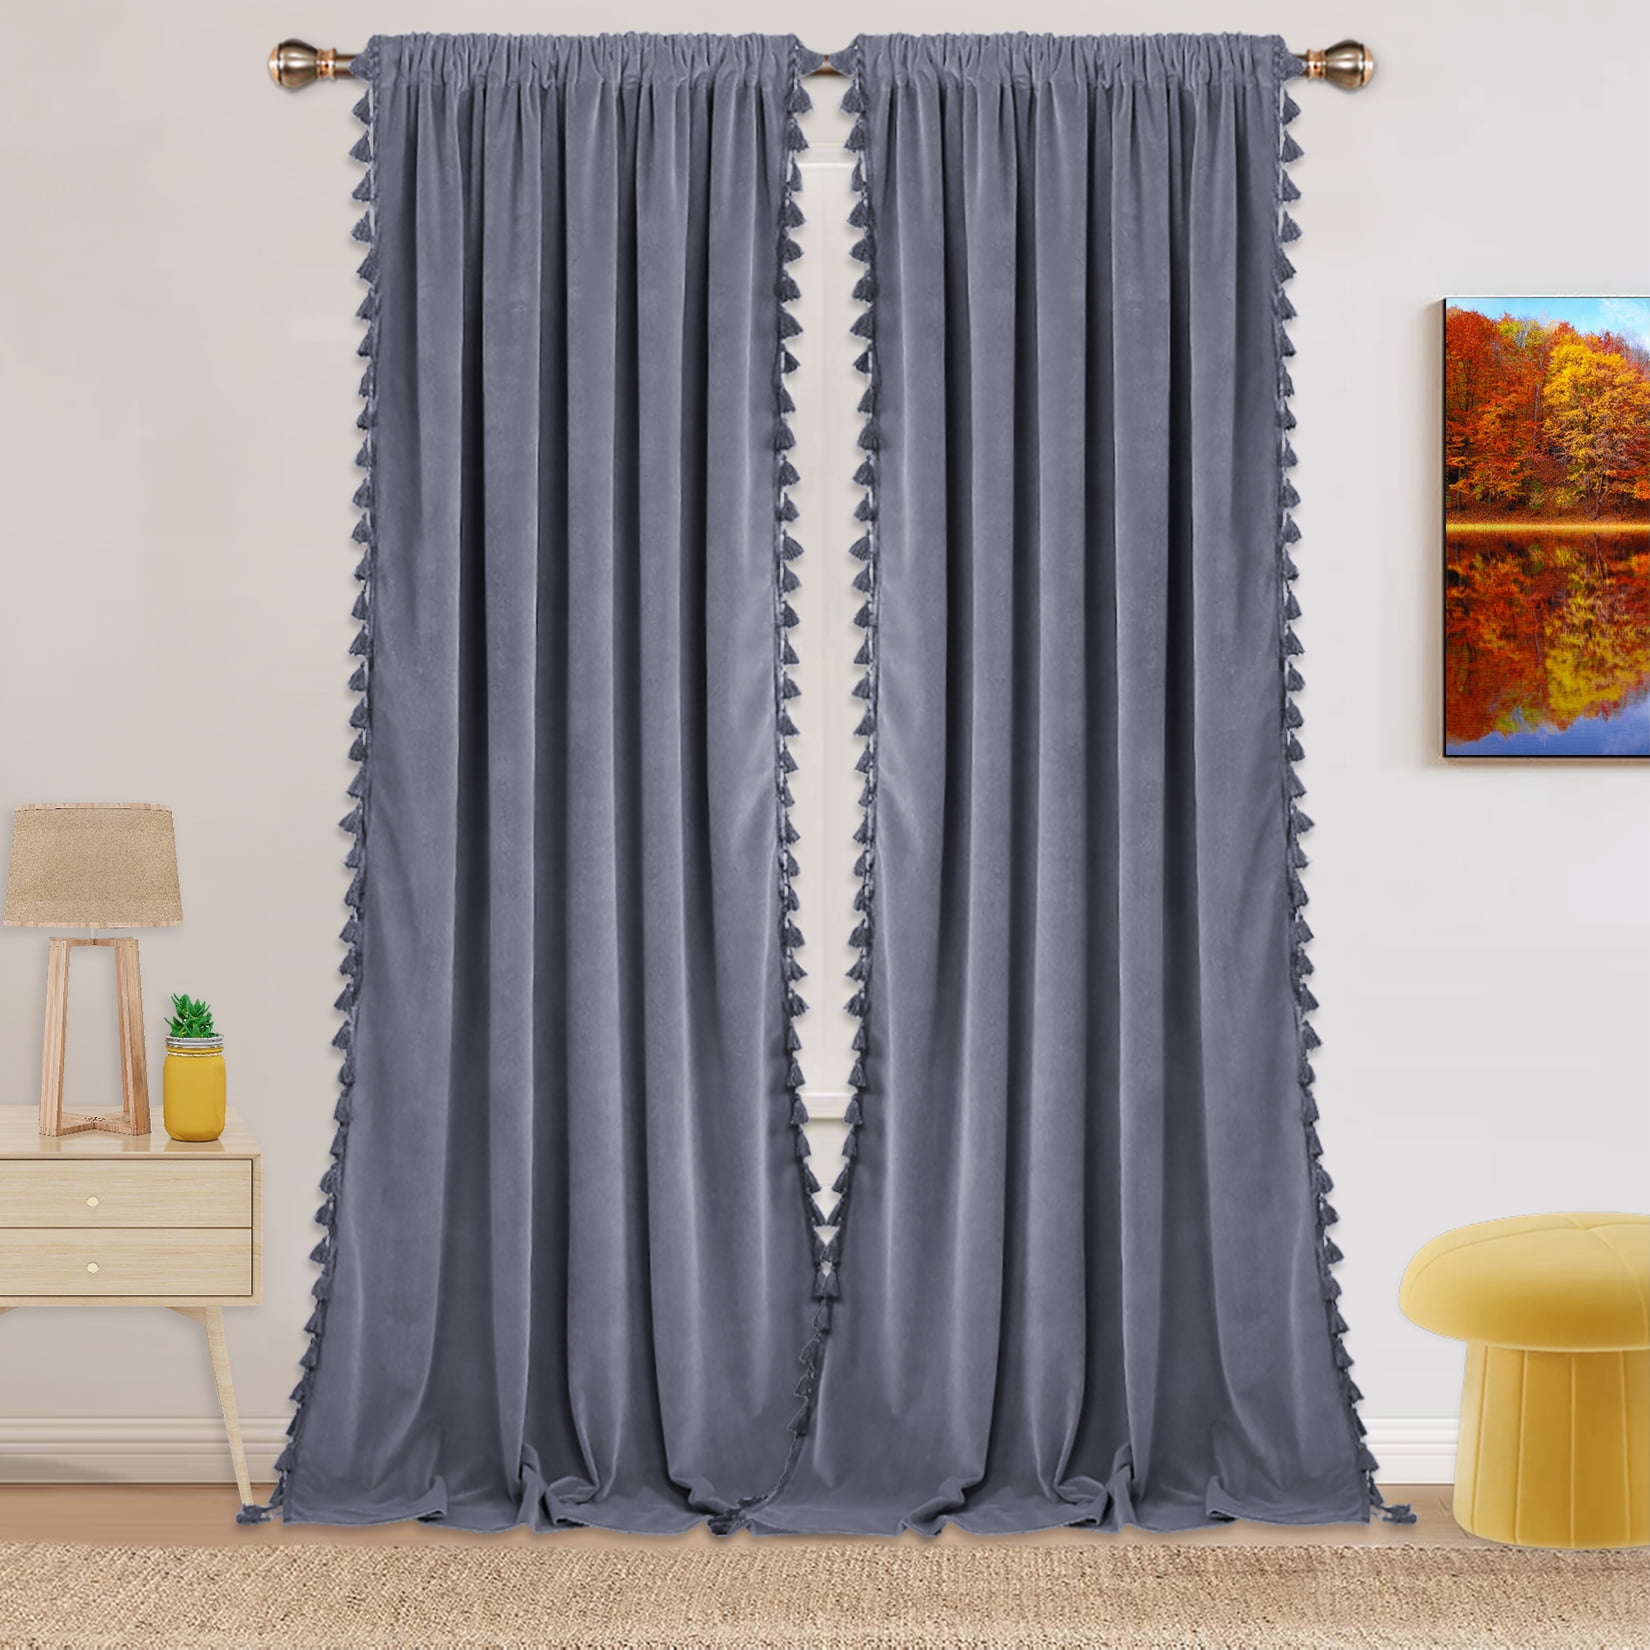 Details about   Vintage Curtains Boho Tassel Cotton Linen Curtain for Living Room Window Drapes 